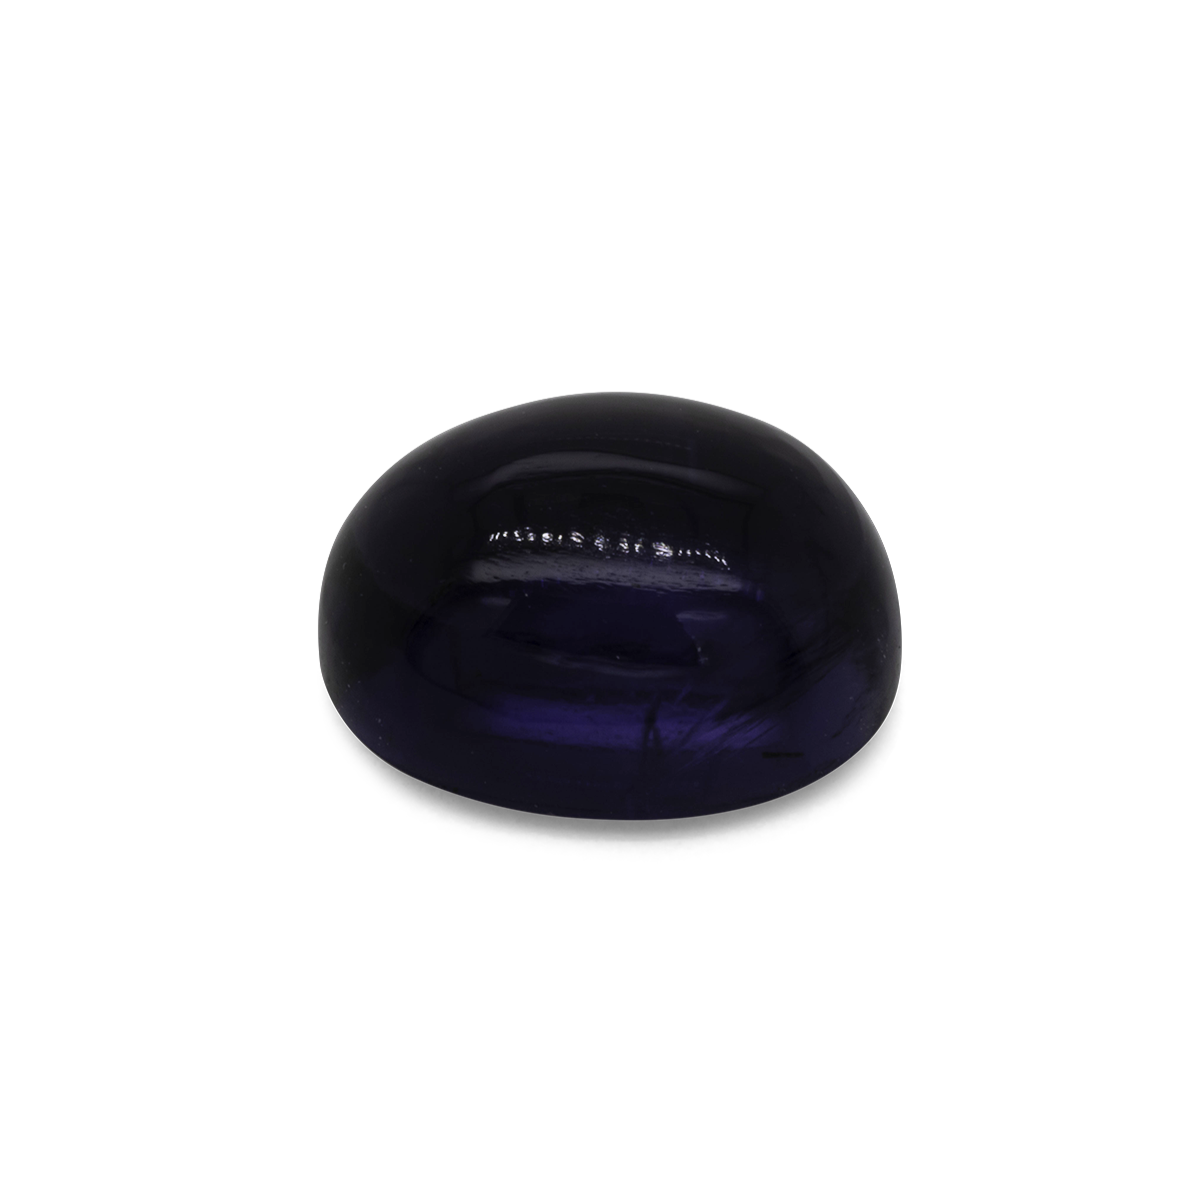 Iolite - purple/blue, oval, 9x7 mm, 1.90-2.20 cts, No. IOL18001